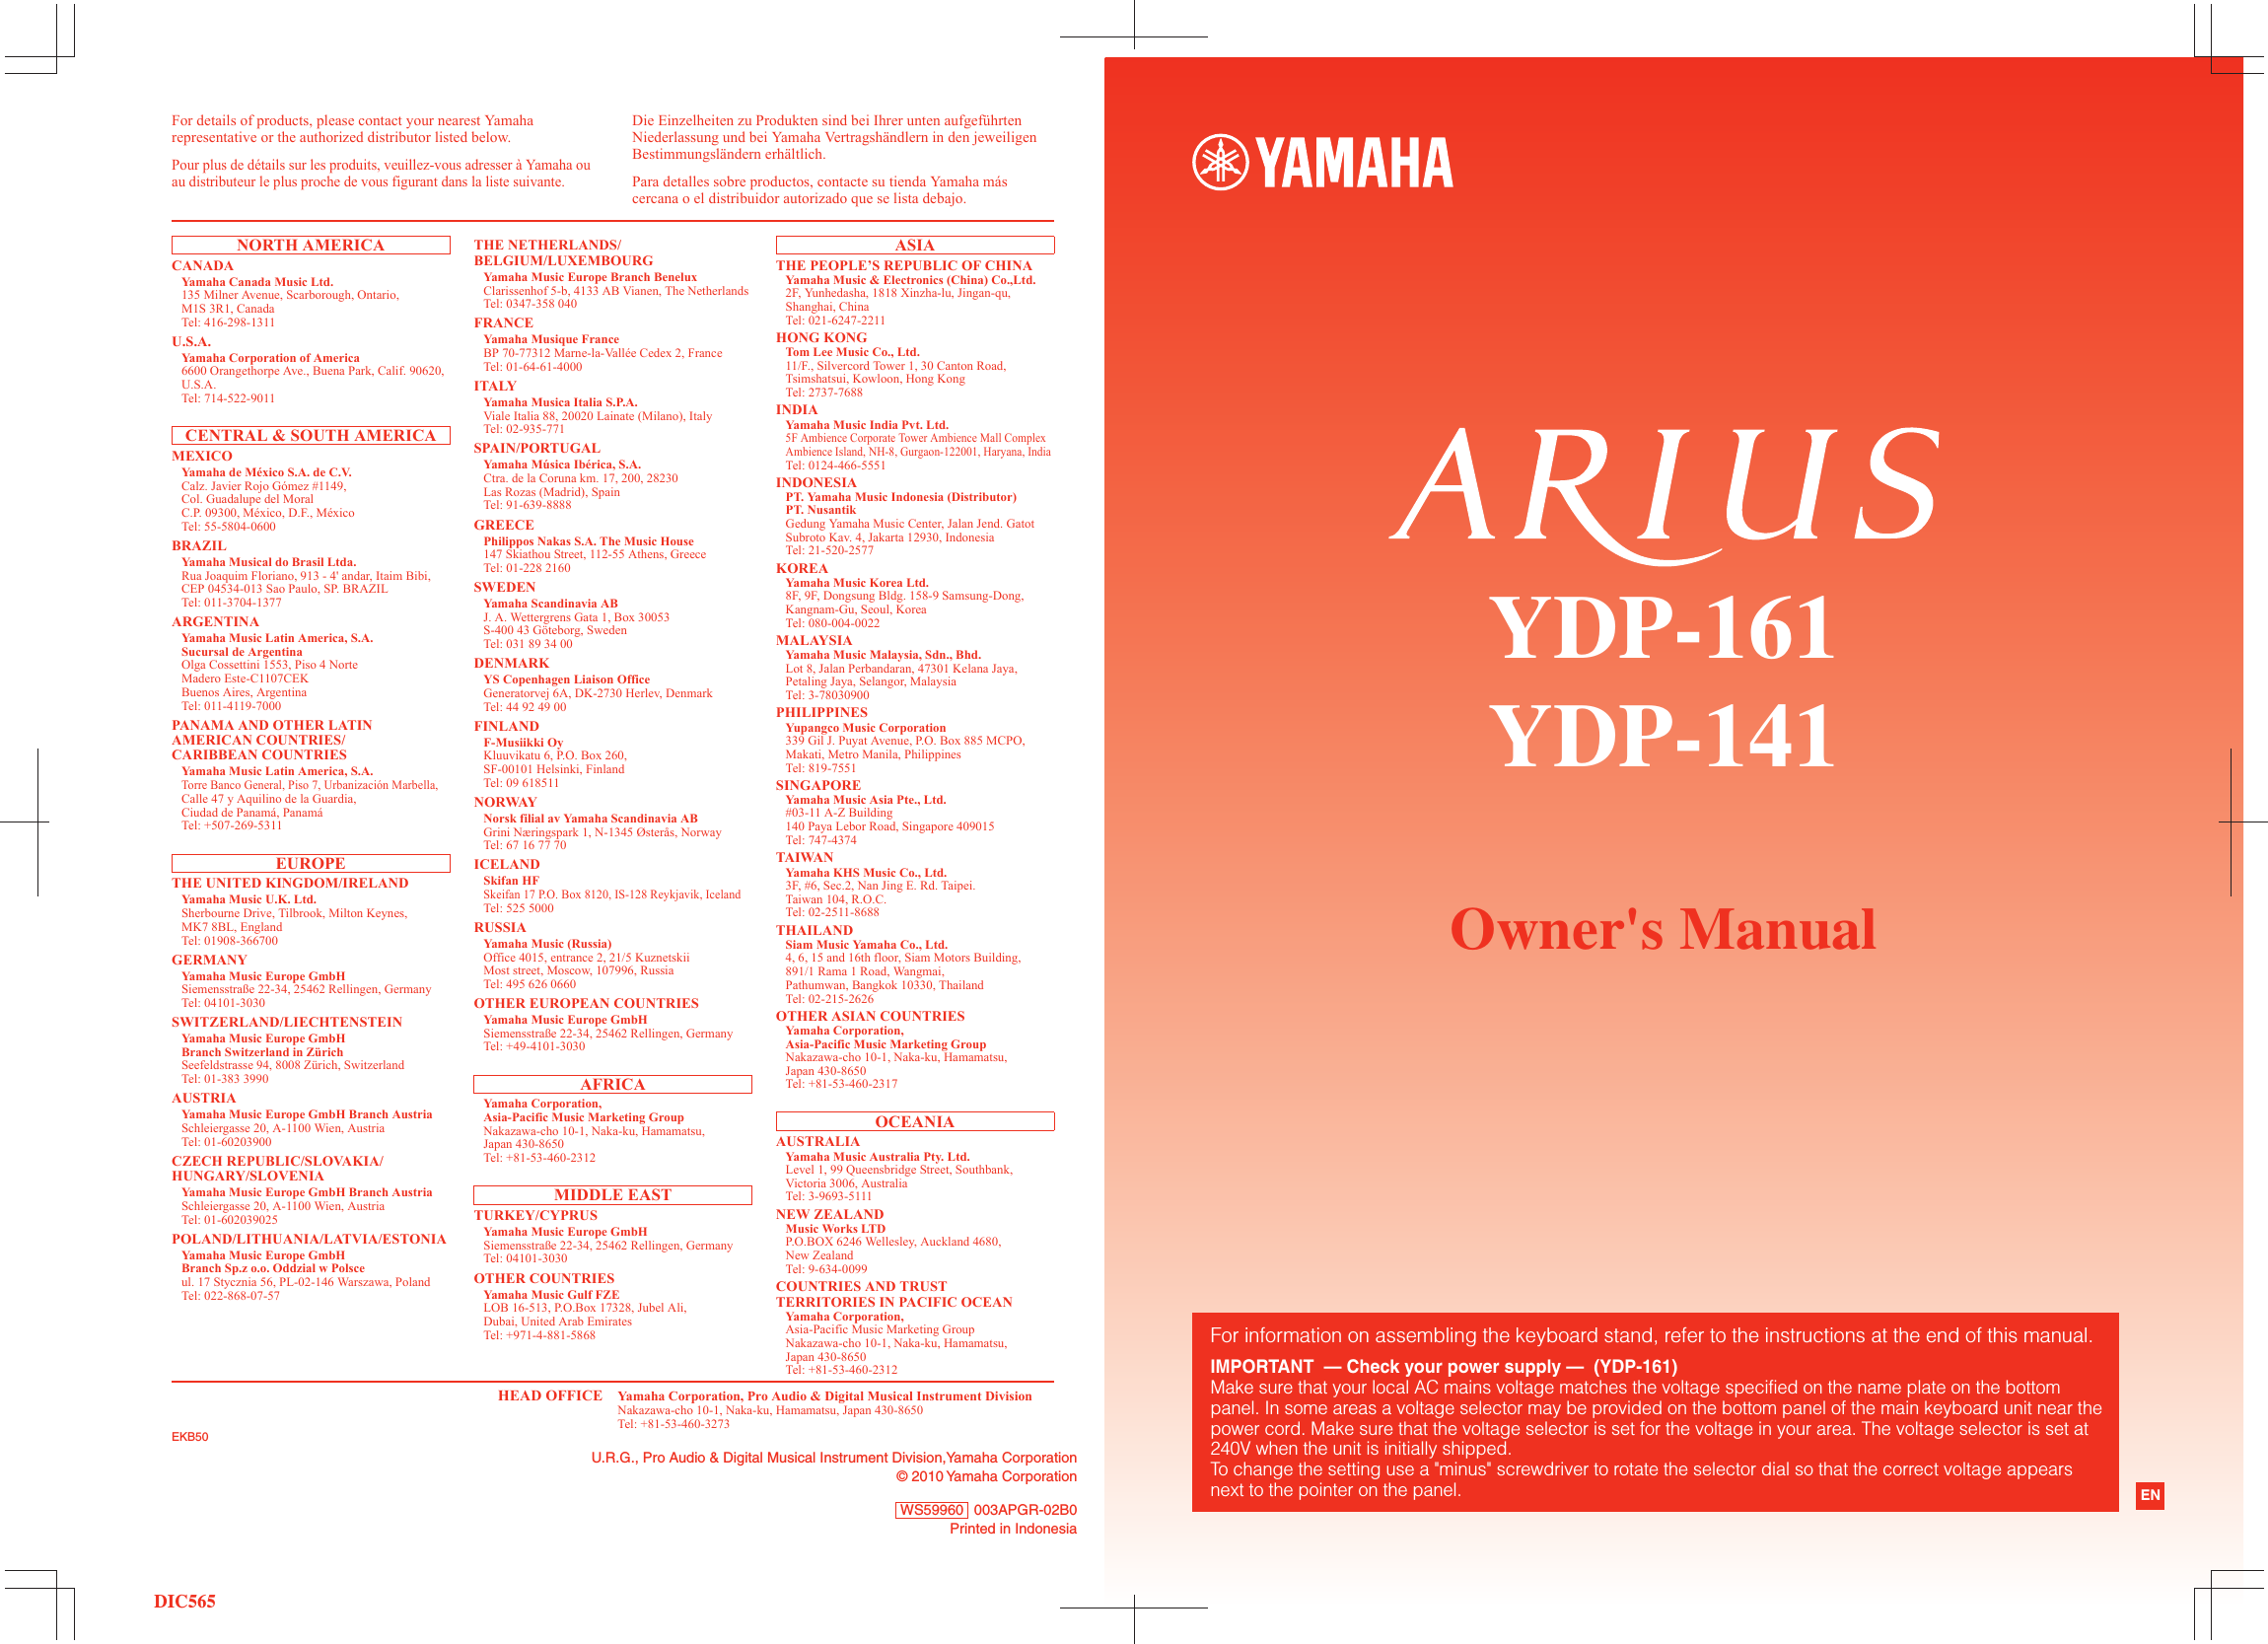 Yamaha YDP 161/141 Owner's Manual Owner's Ydp161 En Om B0